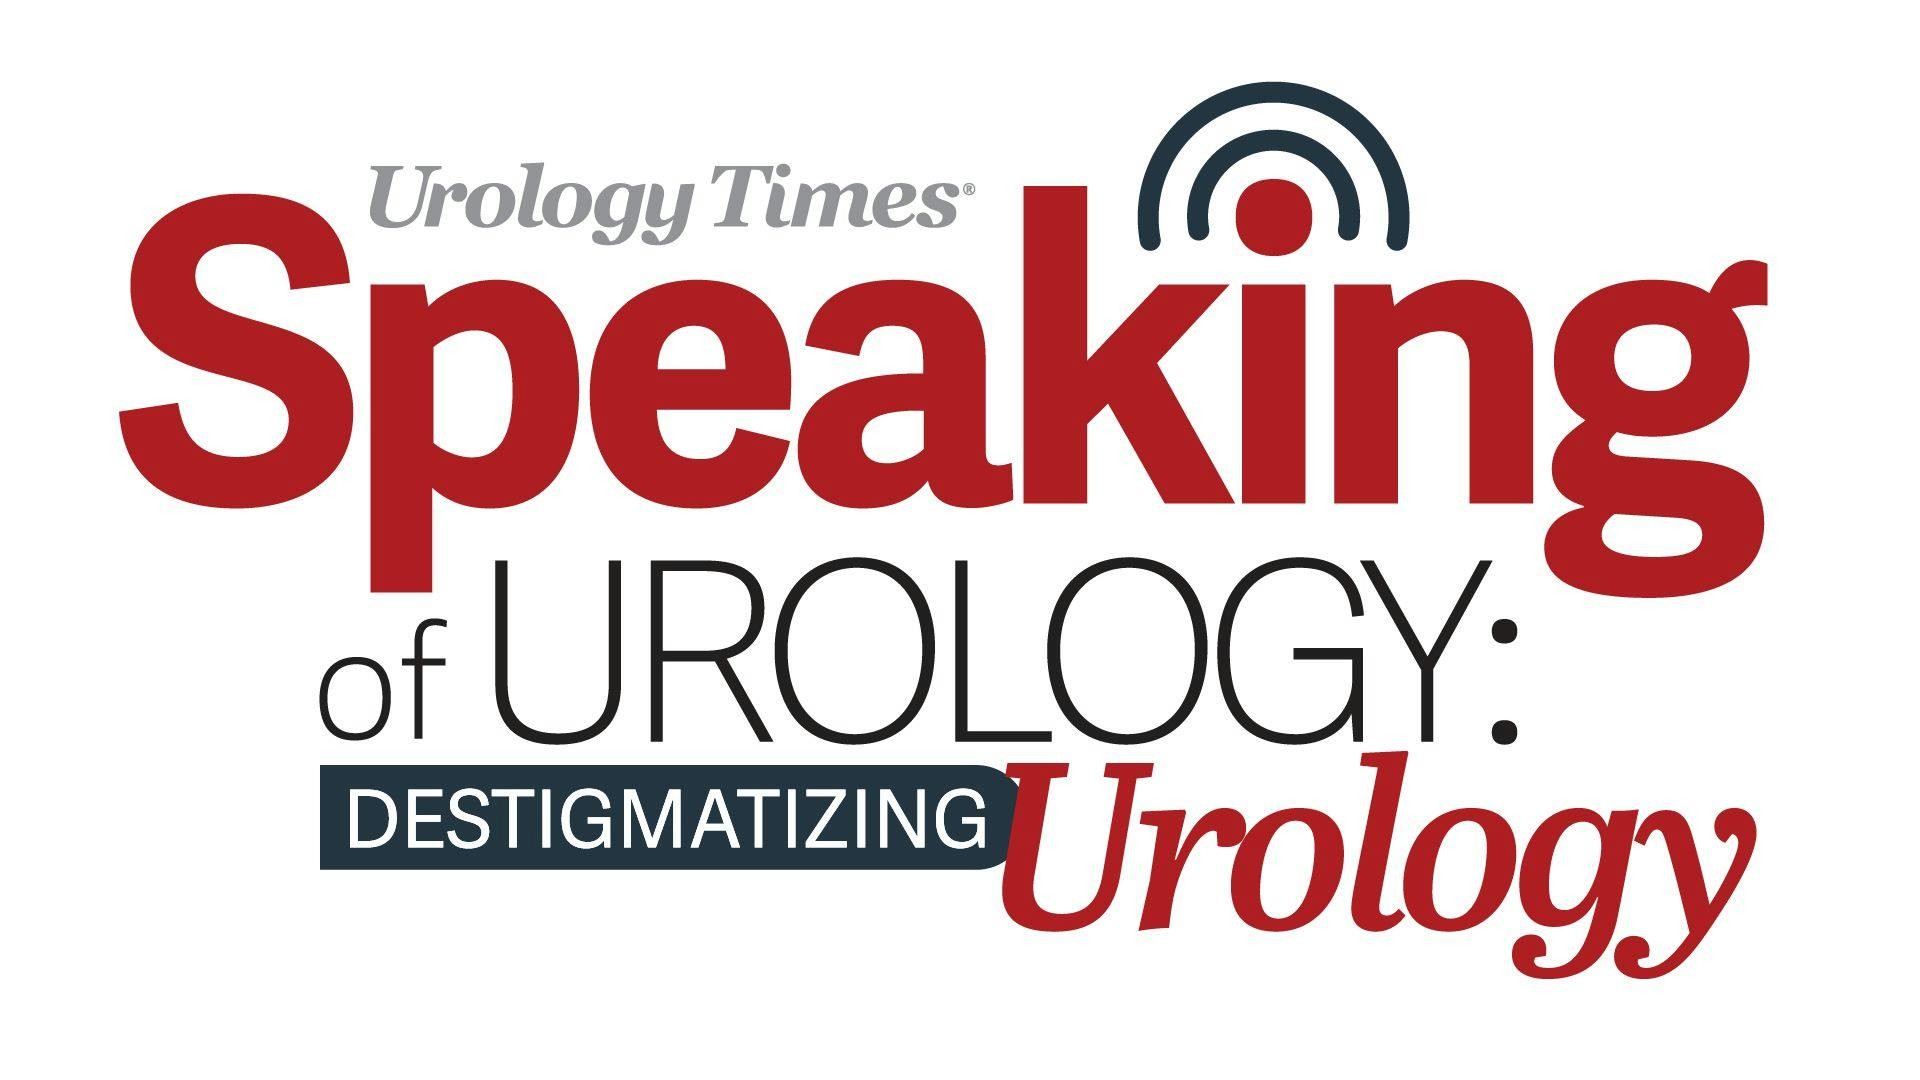 Destigmatizing Urology: Dr. McVary discusses enlarged prostates